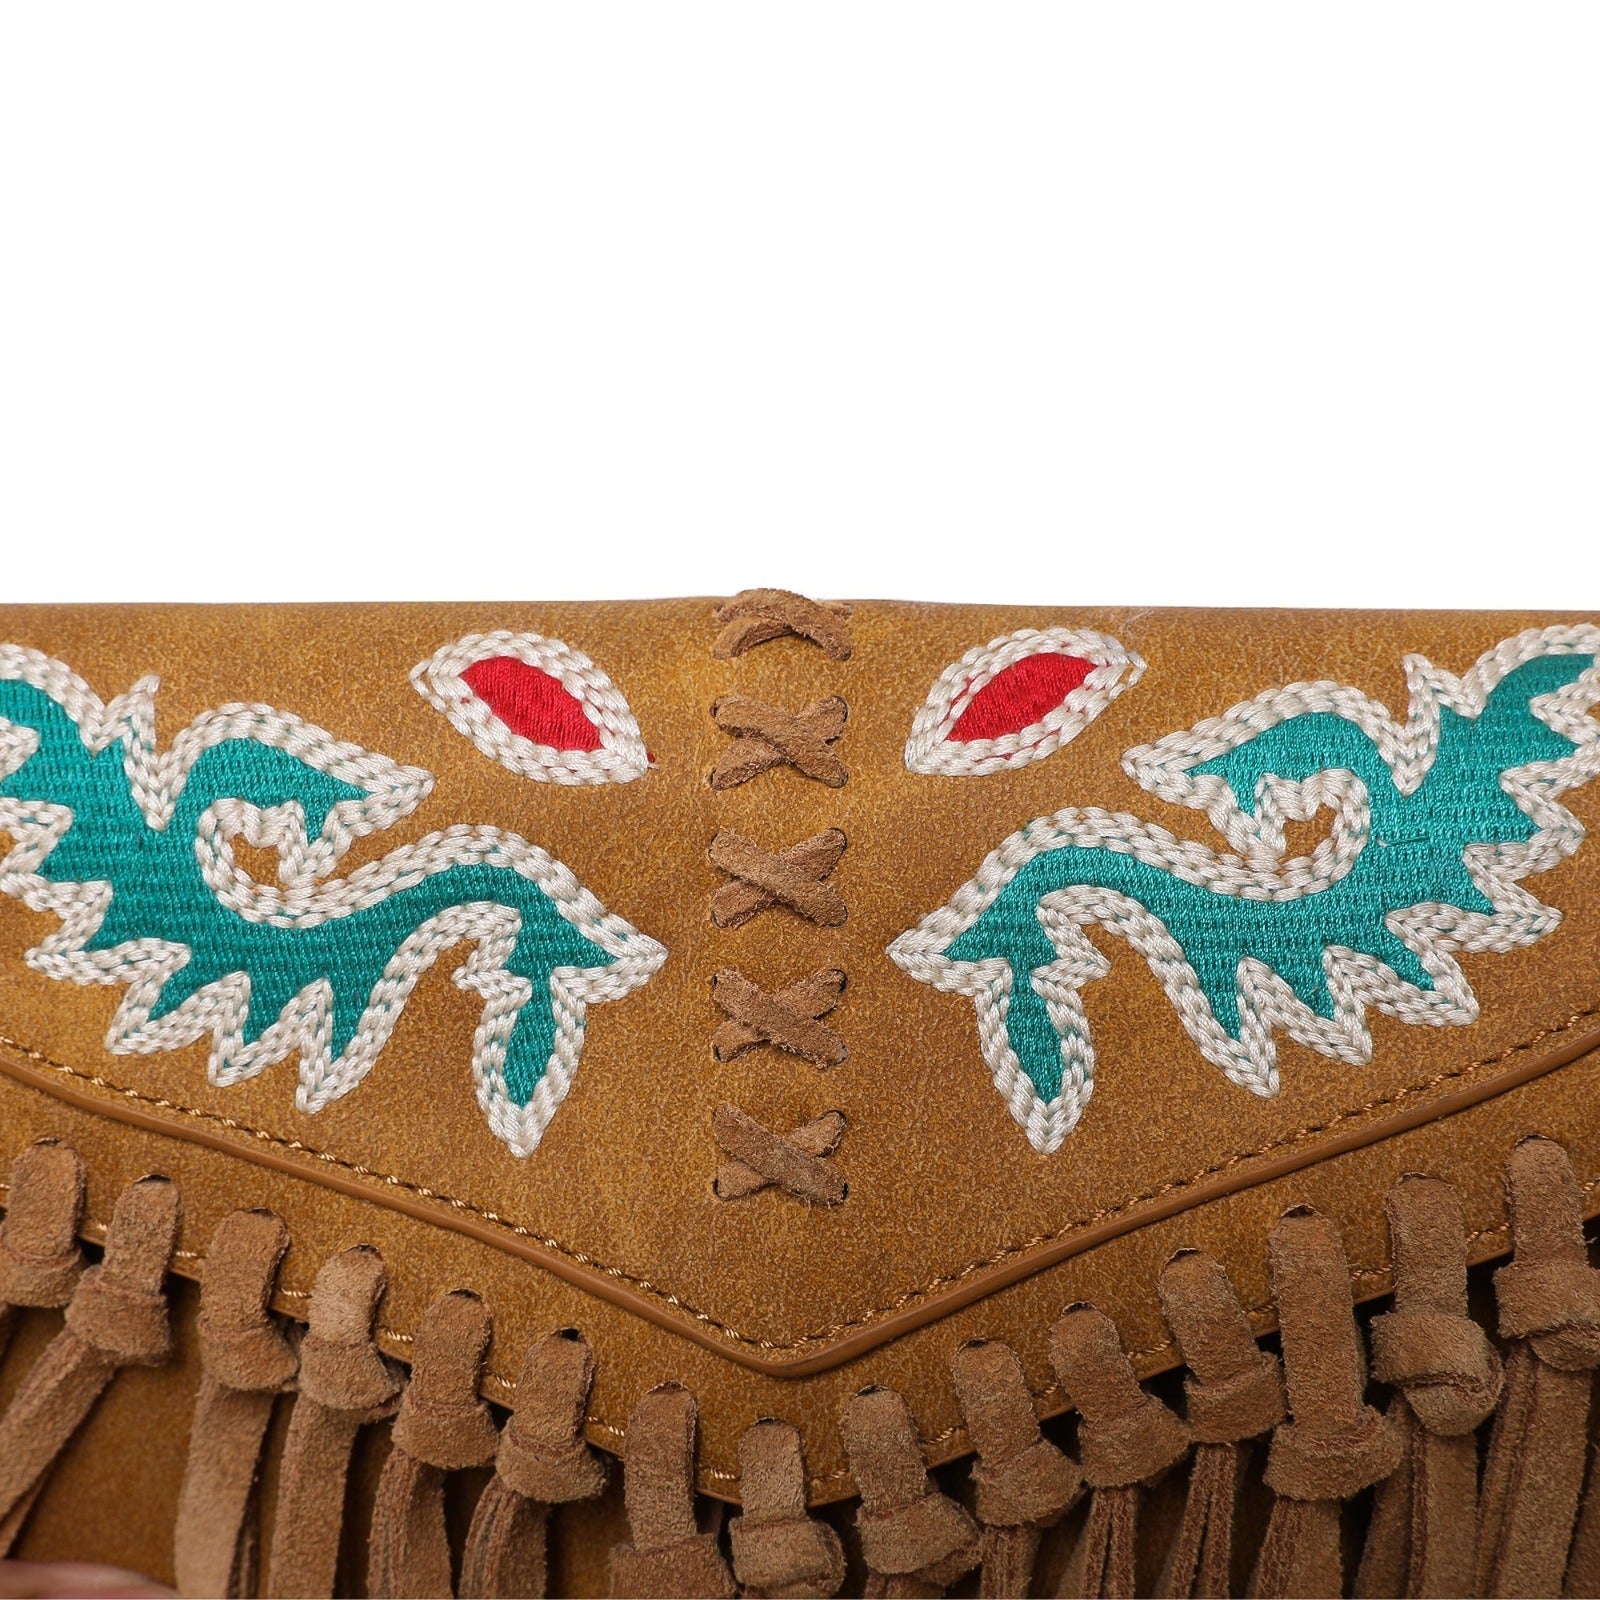 Wrangler Genuine Leather Fringe Crossbody Bag – Montana West World